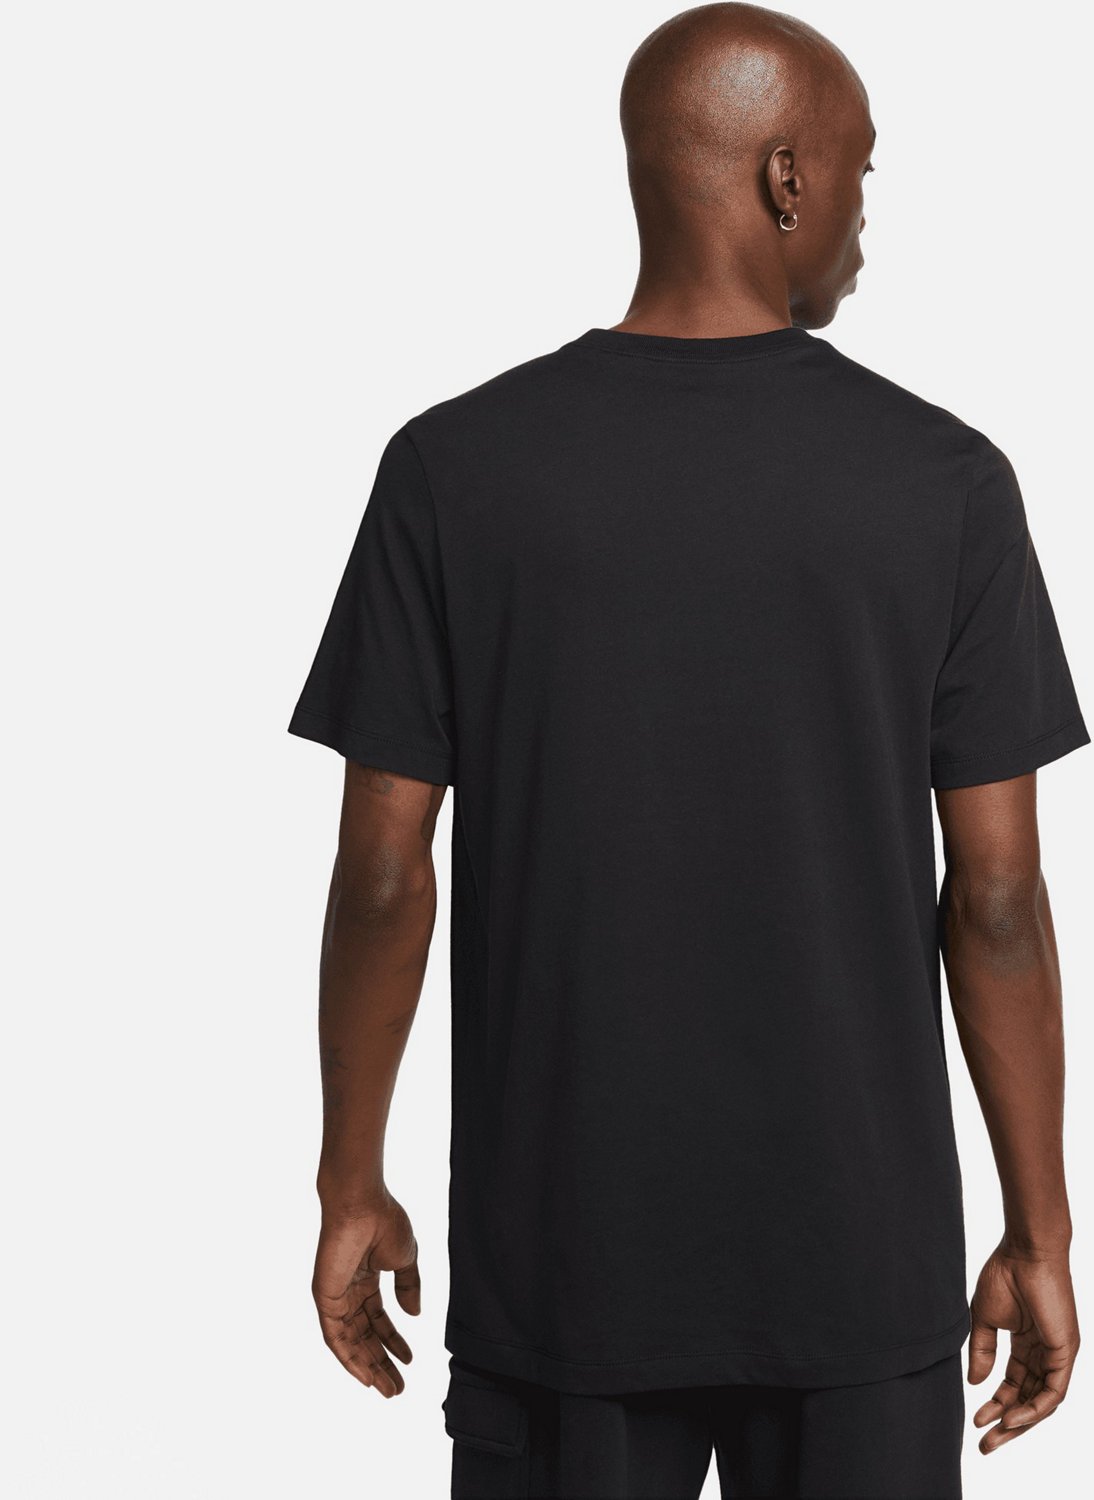 Academy Swoosh at T-shirt Men\'s Free Shipping | Nike